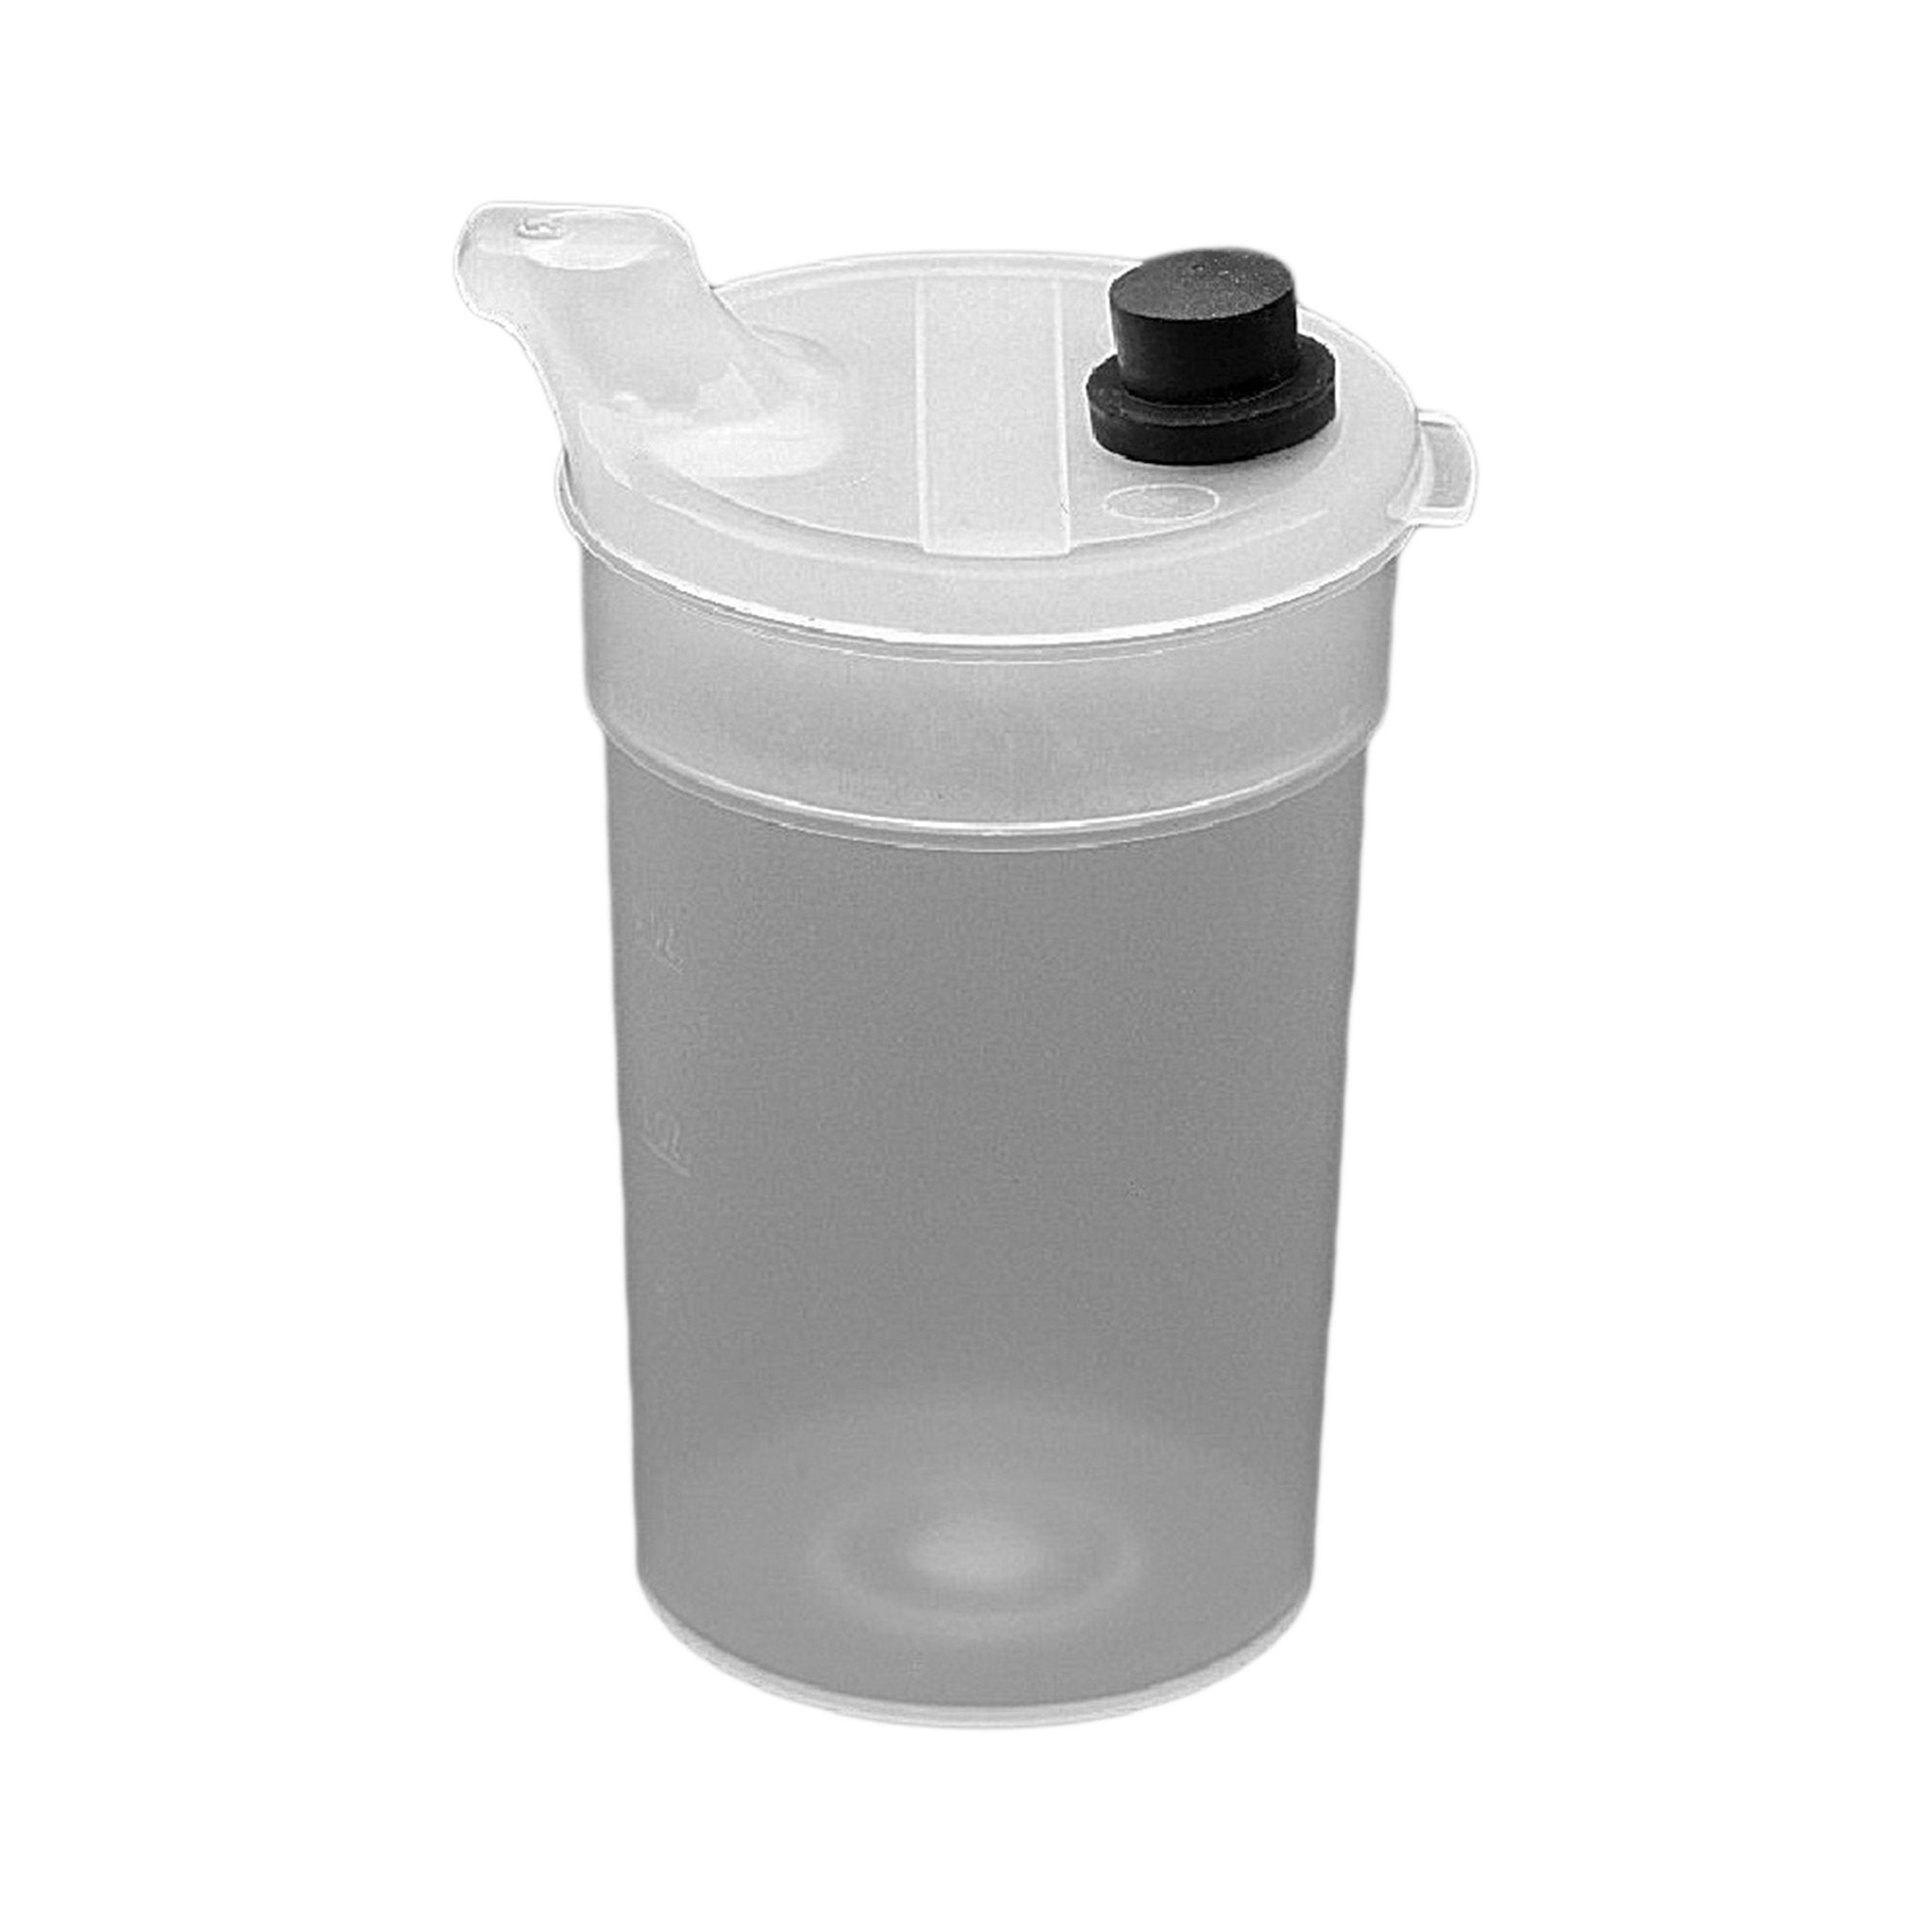 Graduated Feeding Cup Flo-Trol™ 4 to 8 oz. Clear Plastic Reusable